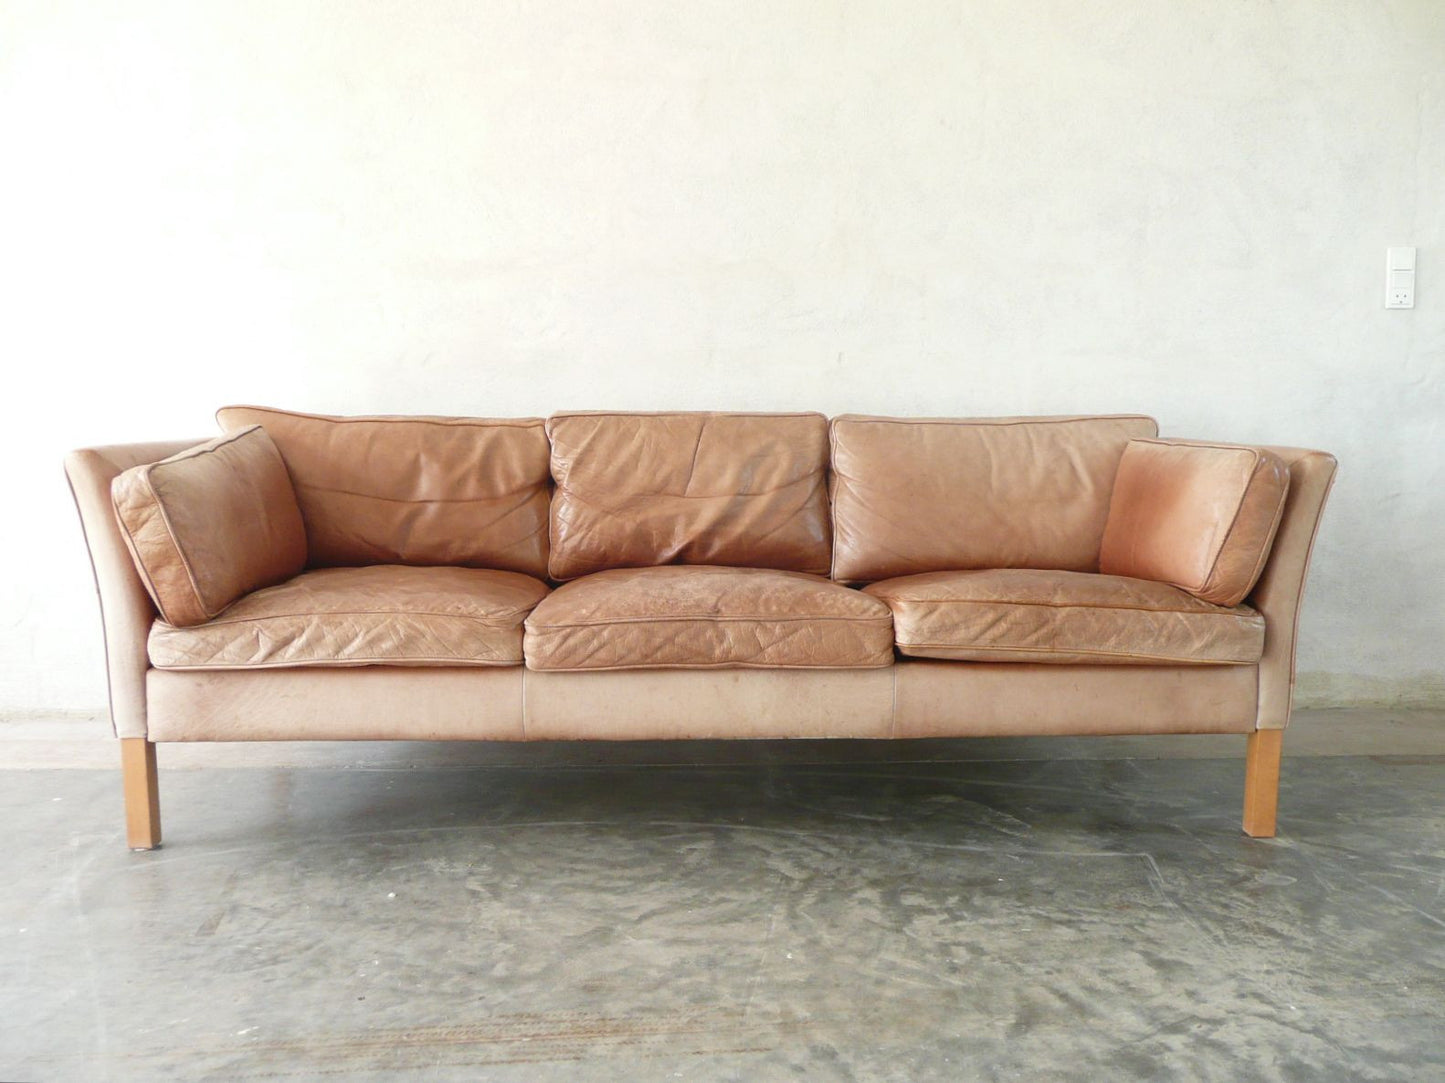 Tanned leather three seat sofa